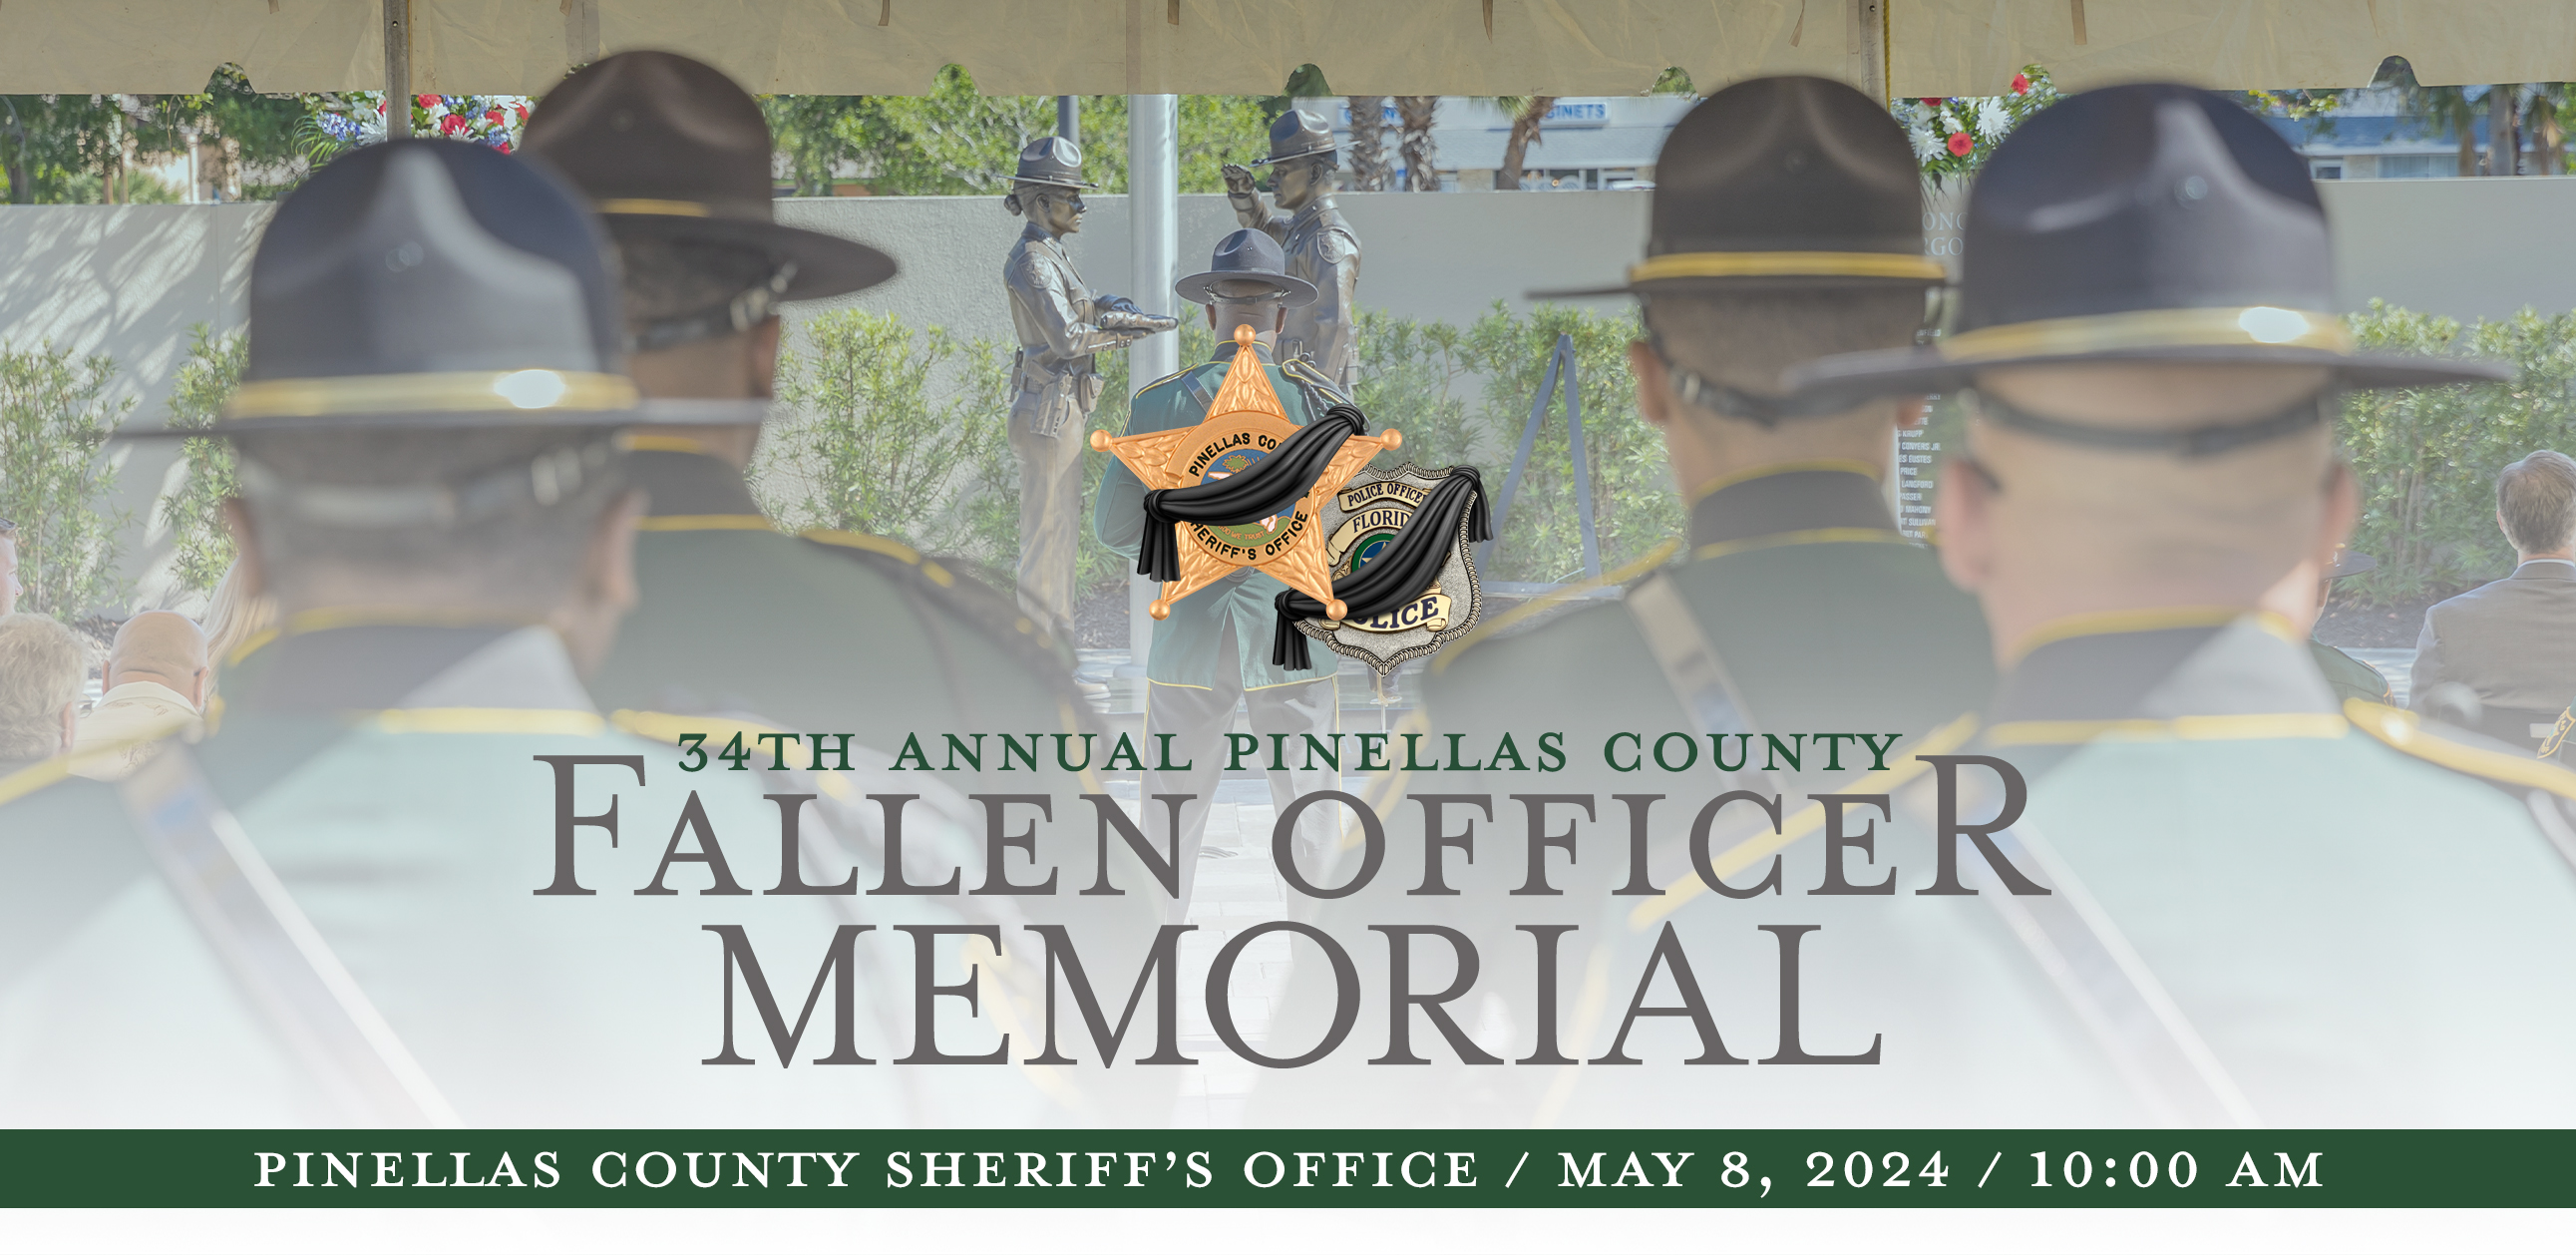 Pinellas County Fallen Officer Memorial